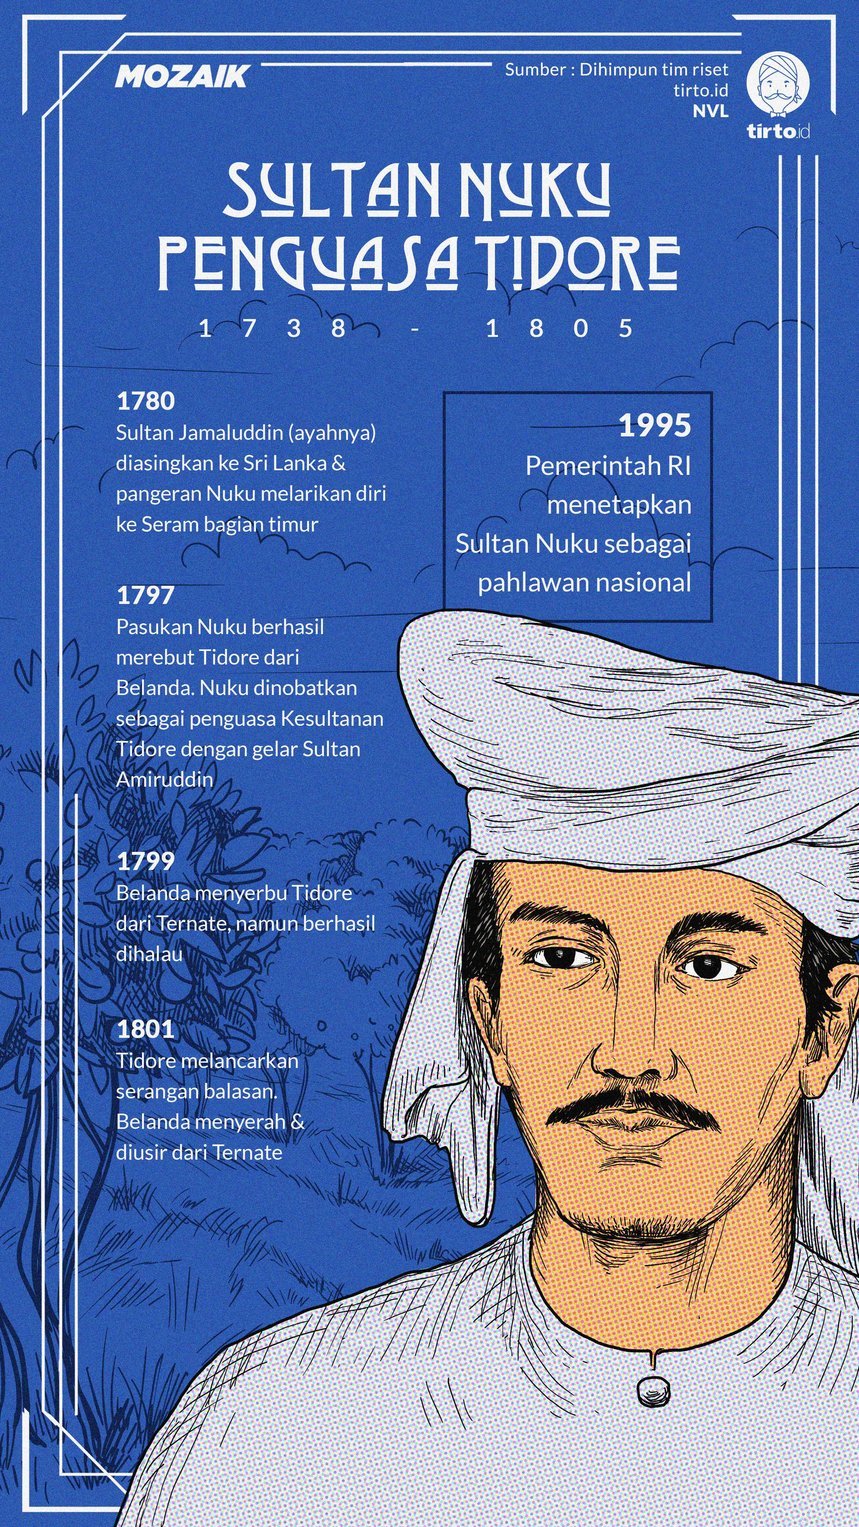 Infografik Mozaik Sultan Nuku